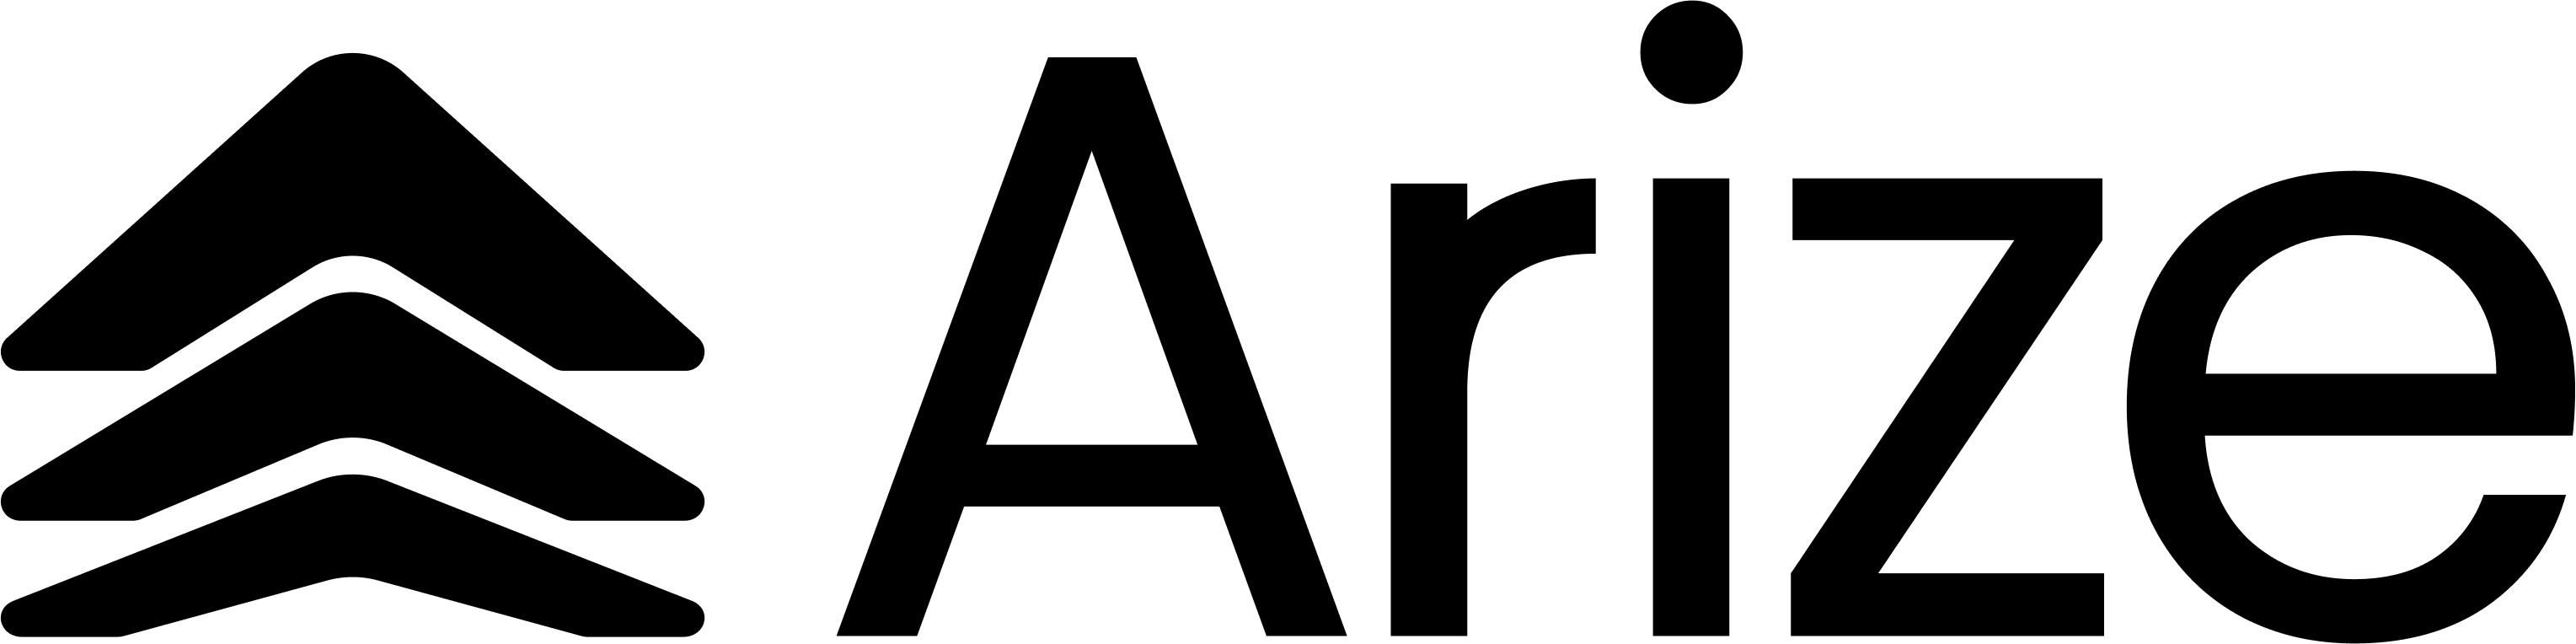 Arize Logo